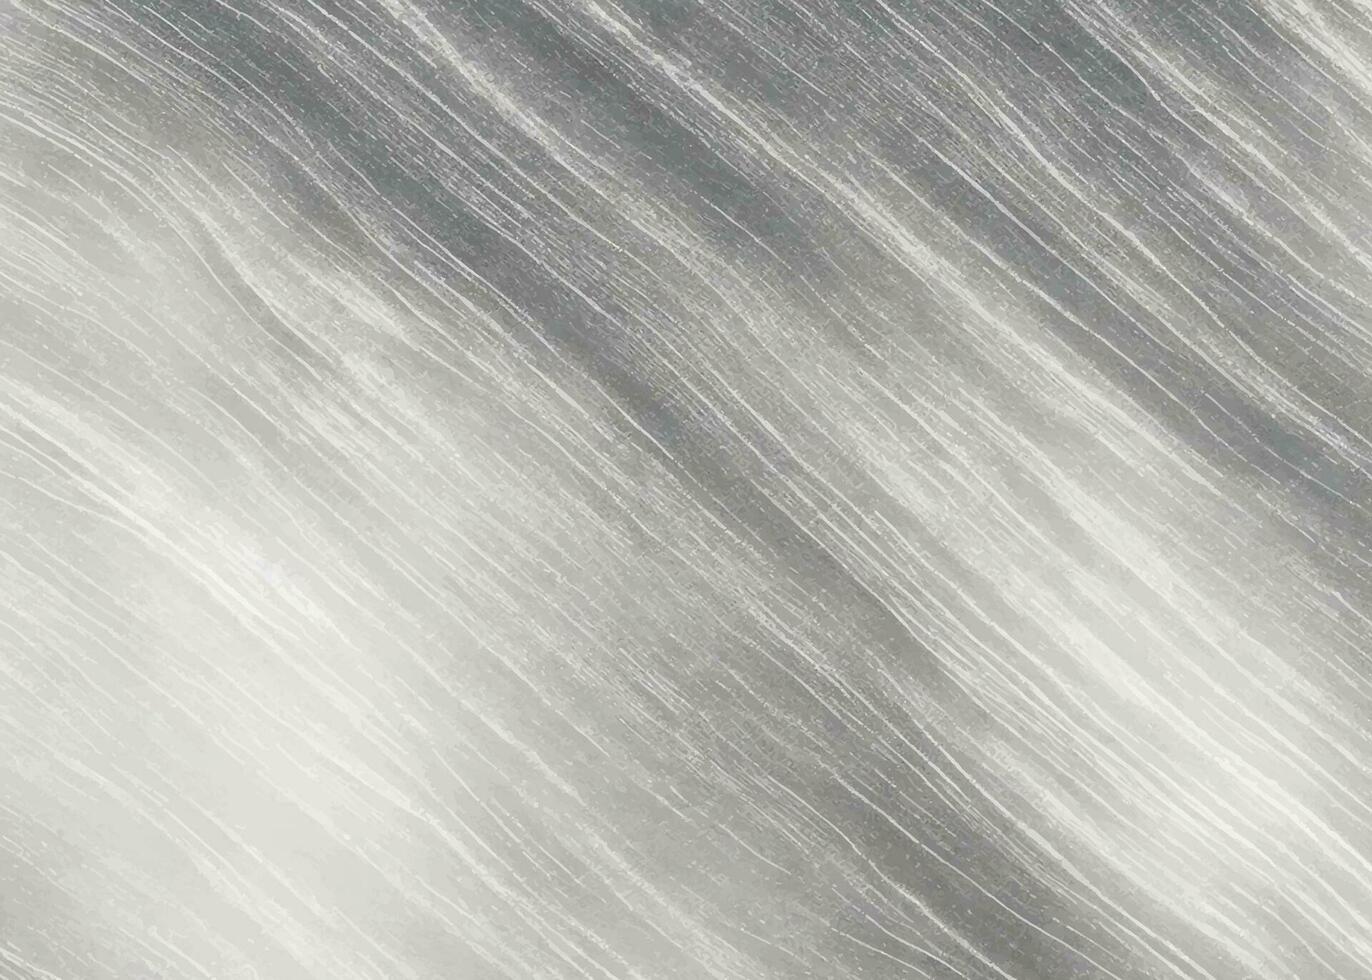 https://static.vecteezy.com/system/resources/previews/025/862/150/non_2x/silver-foil-shiny-paper-texture-background-metallic-texture-background-foil-texture-paper-texture-silver-texture-background-silver-foil-background-gray-platinum-metallic-texture-vector.jpg